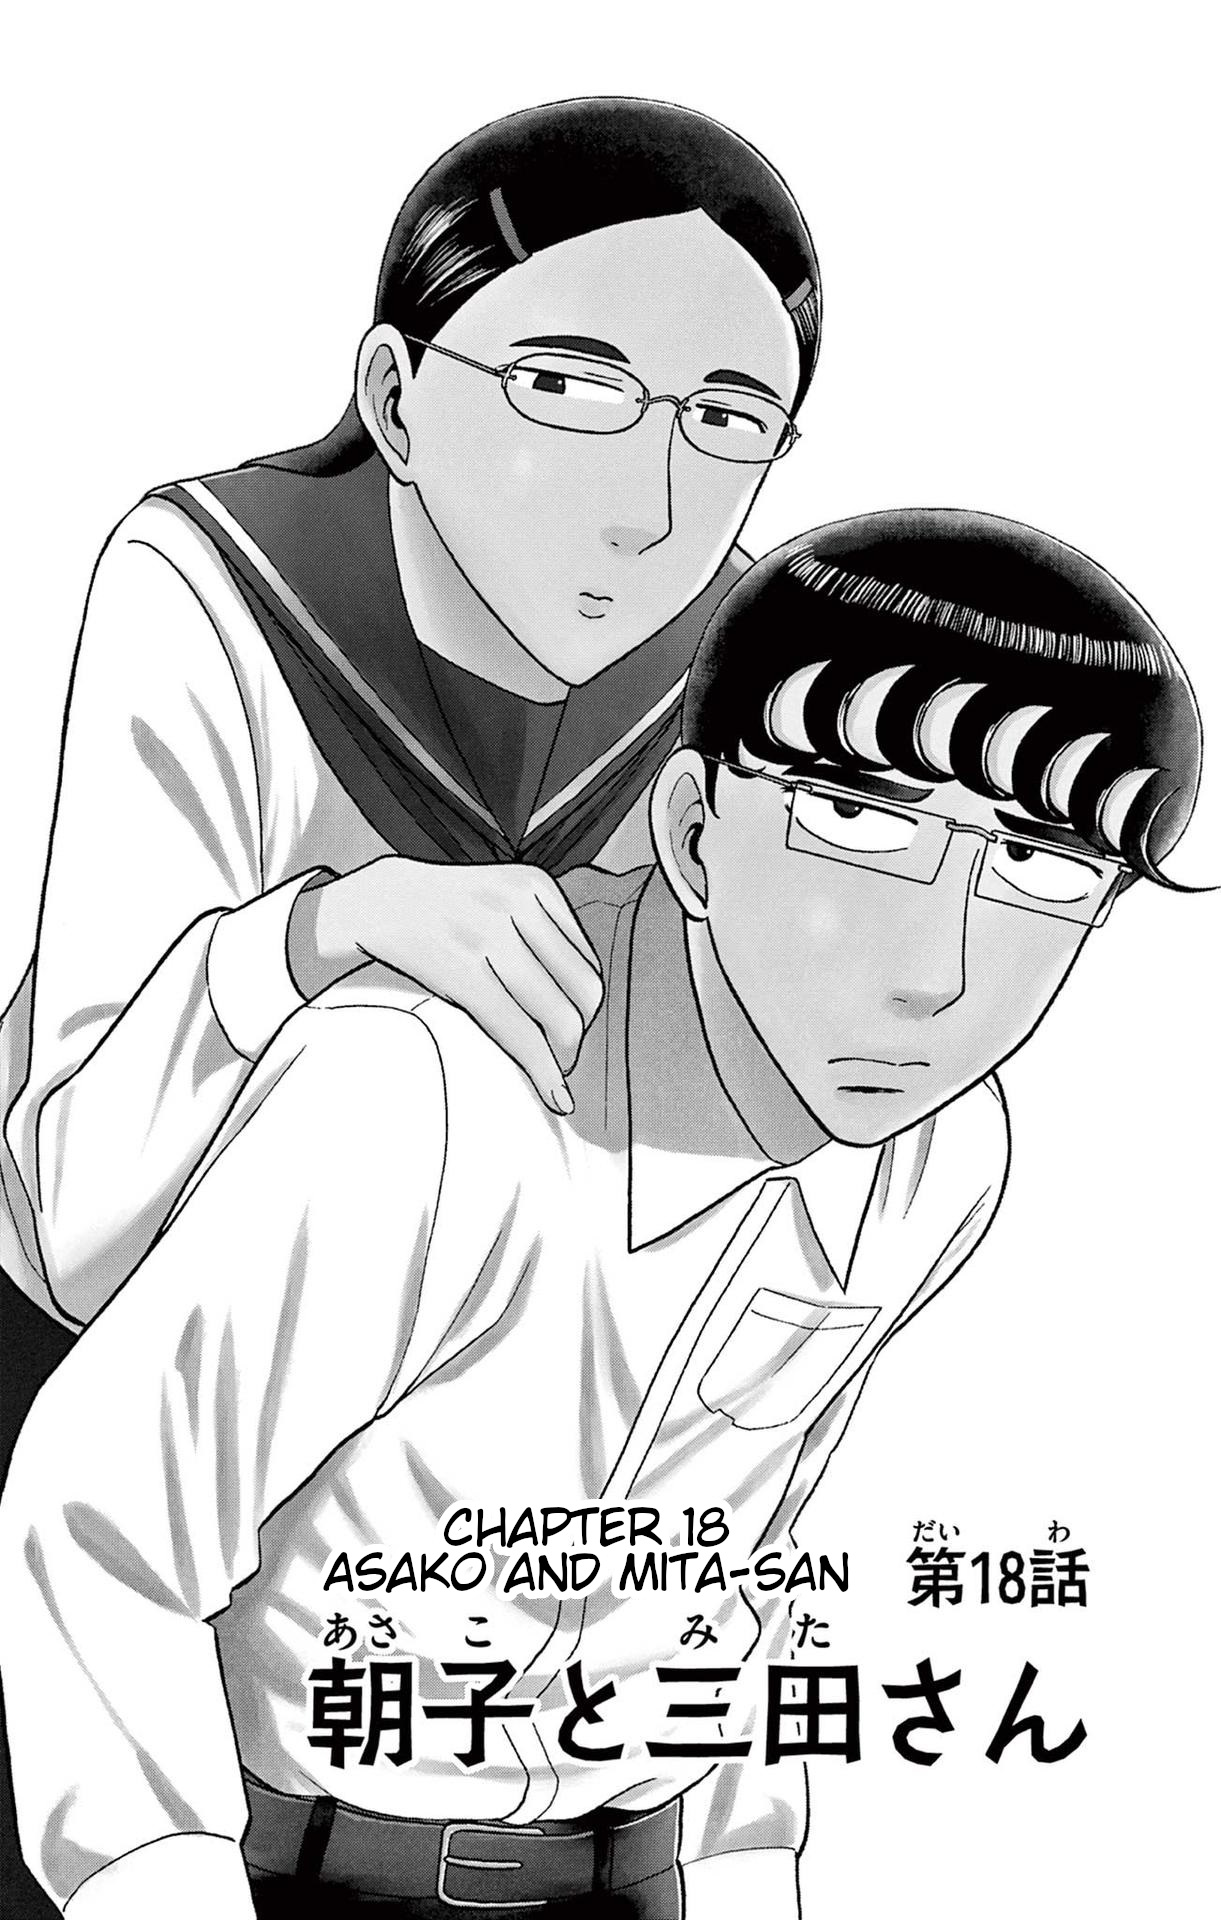 Shiroyama To Mita-San Vol.2 Chapter 18: Asako And Mita-San - Picture 1